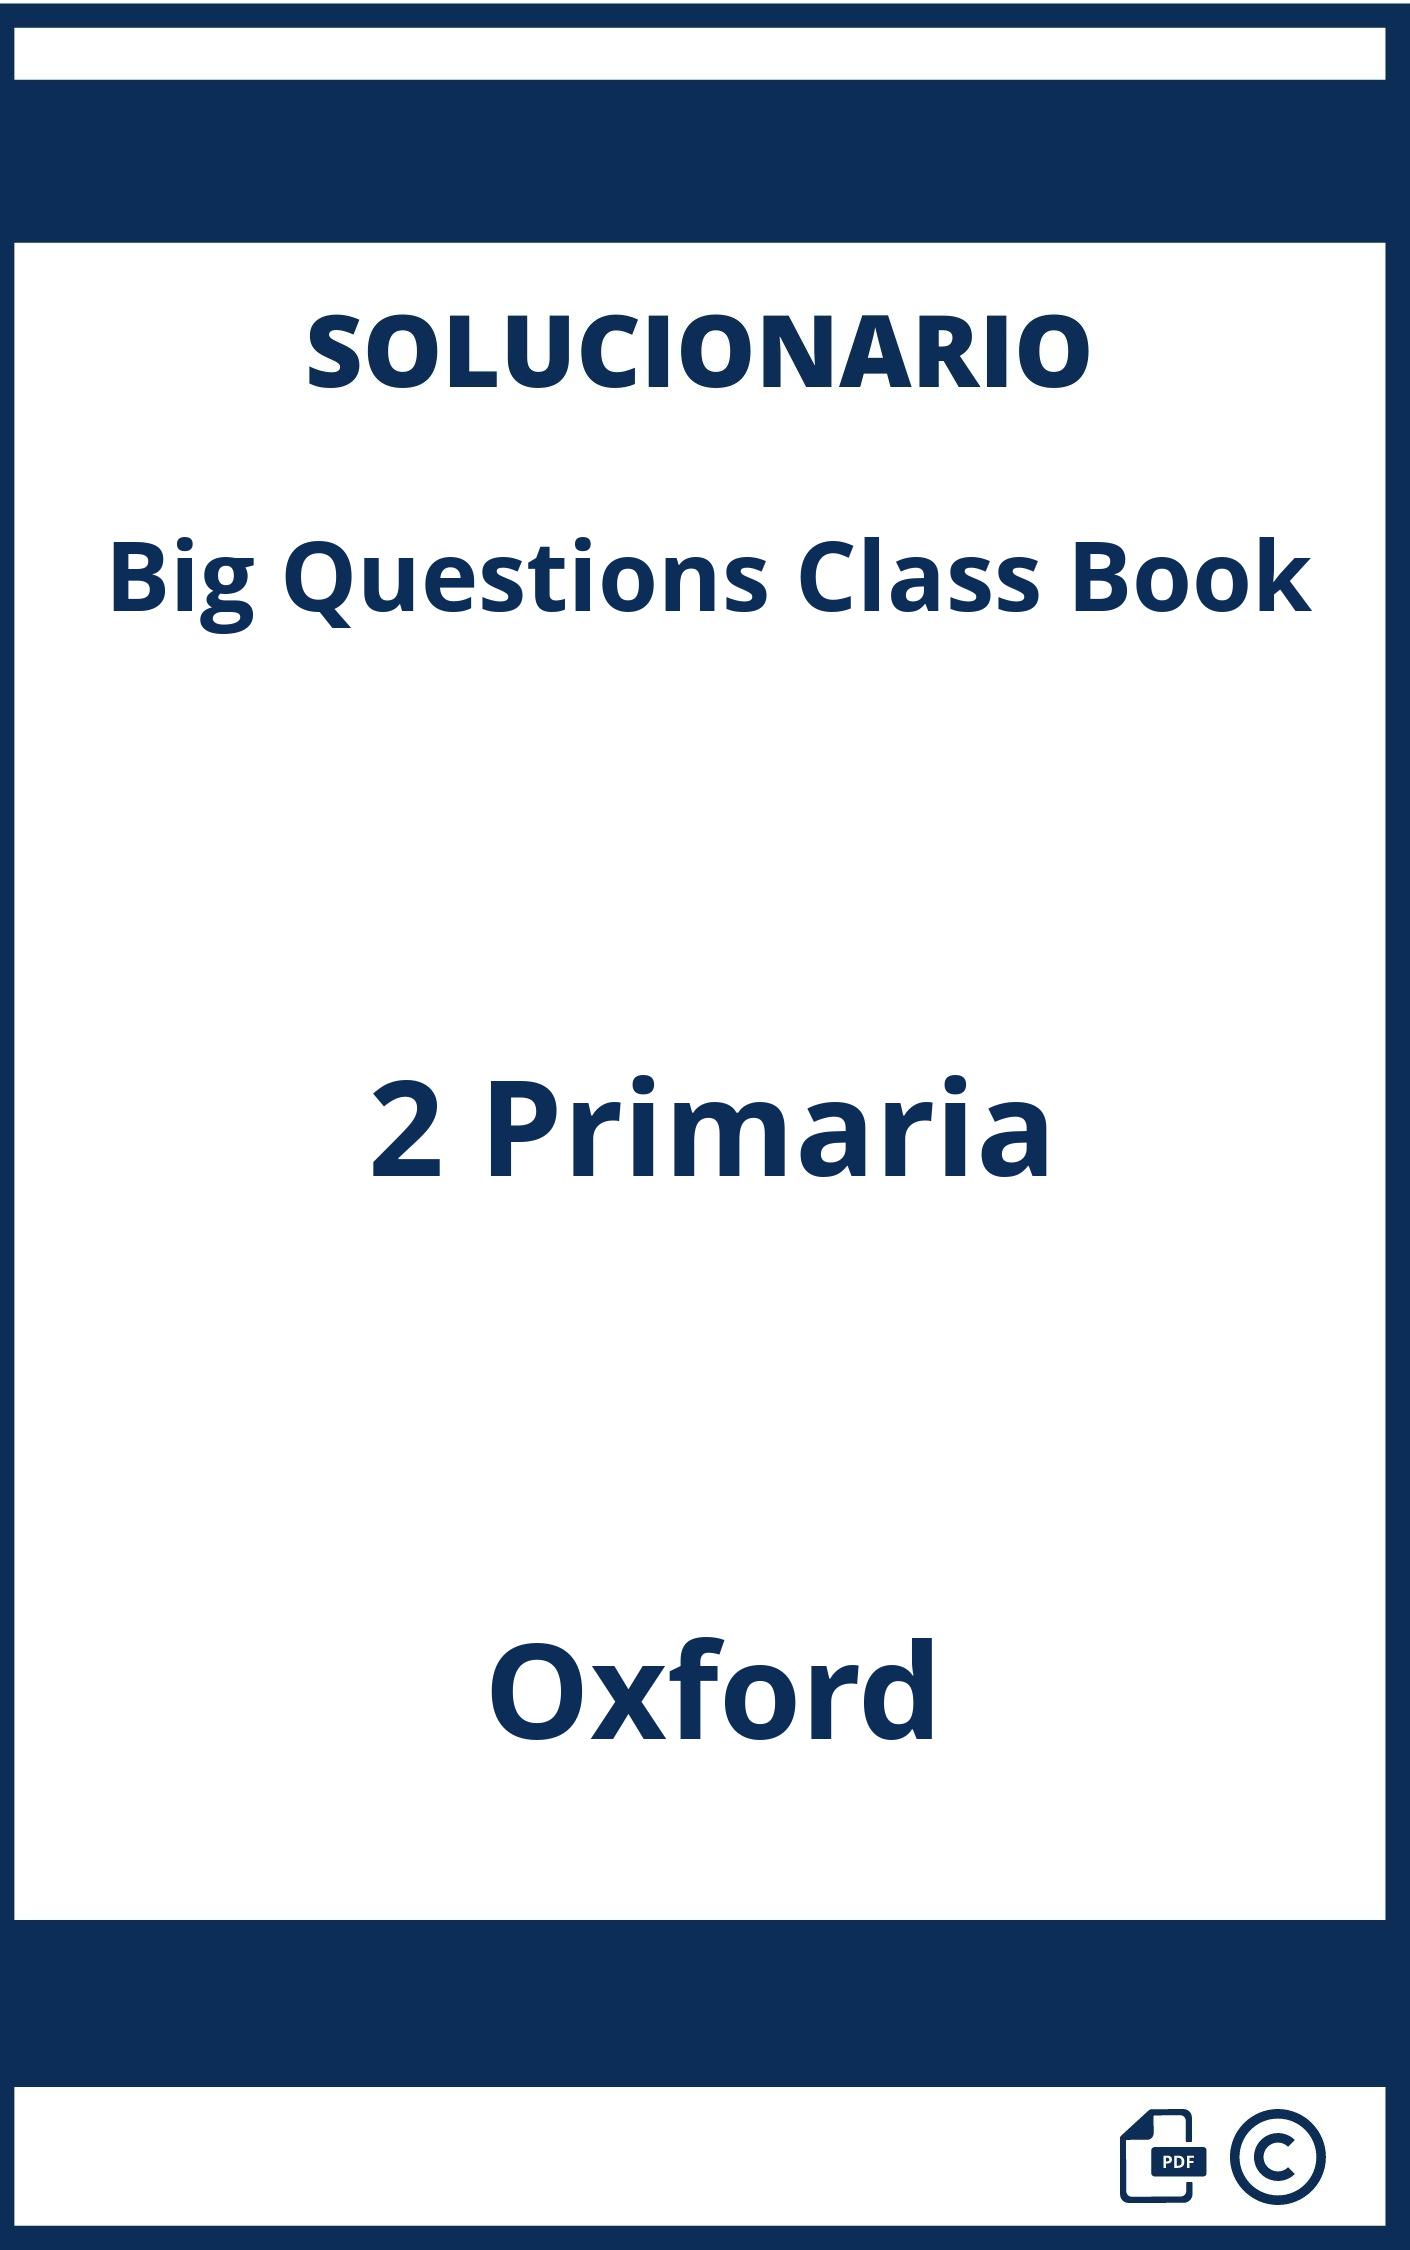 Solucionario Big Questions Class Book 2 Primaria Oxford